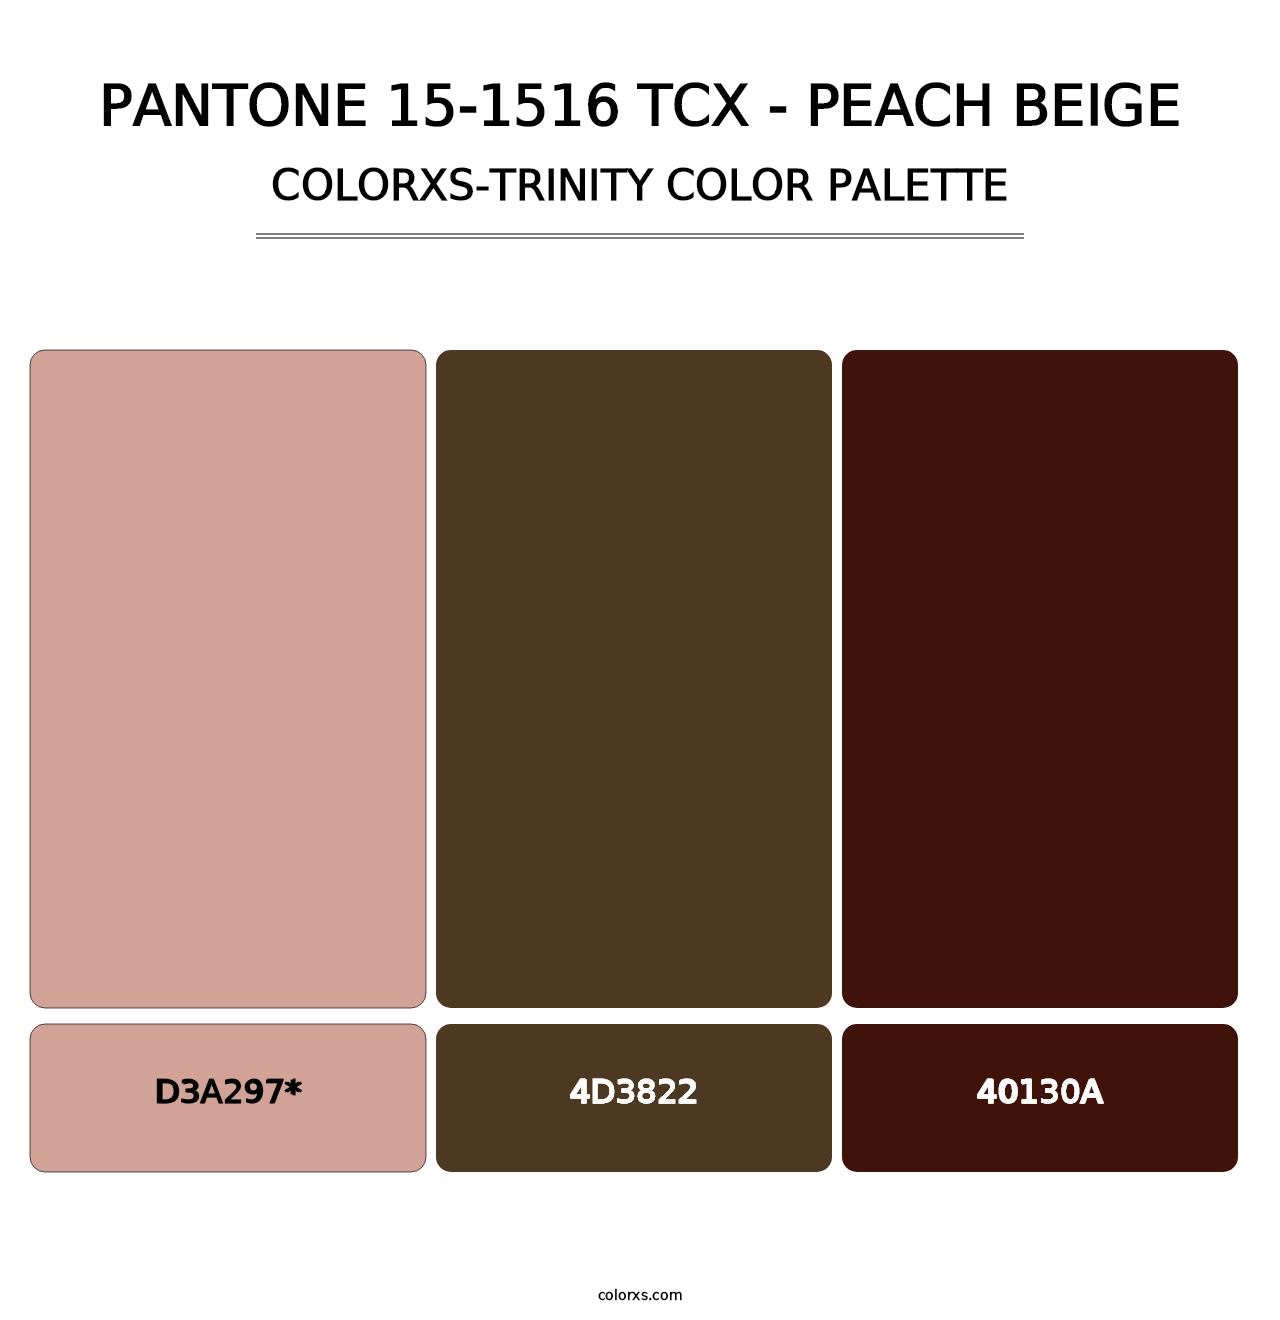 PANTONE 15-1516 TCX - Peach Beige - Colorxs Trinity Palette